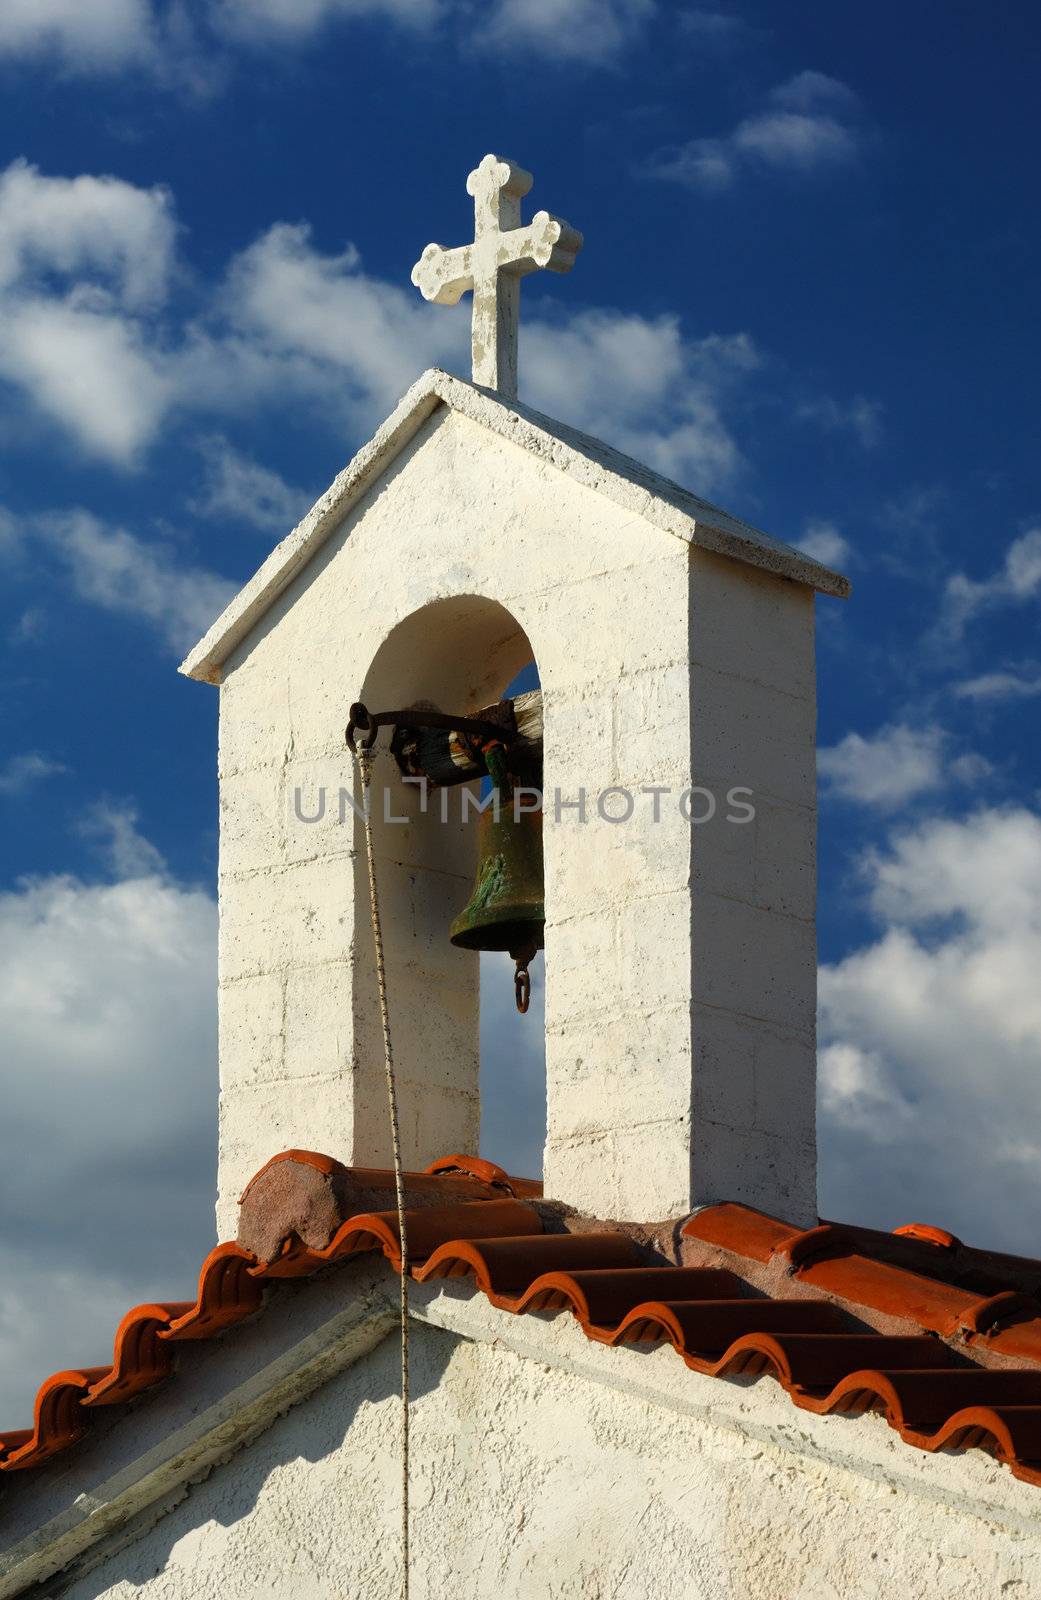 A Greek countryside chapel against a blue cloudy sky